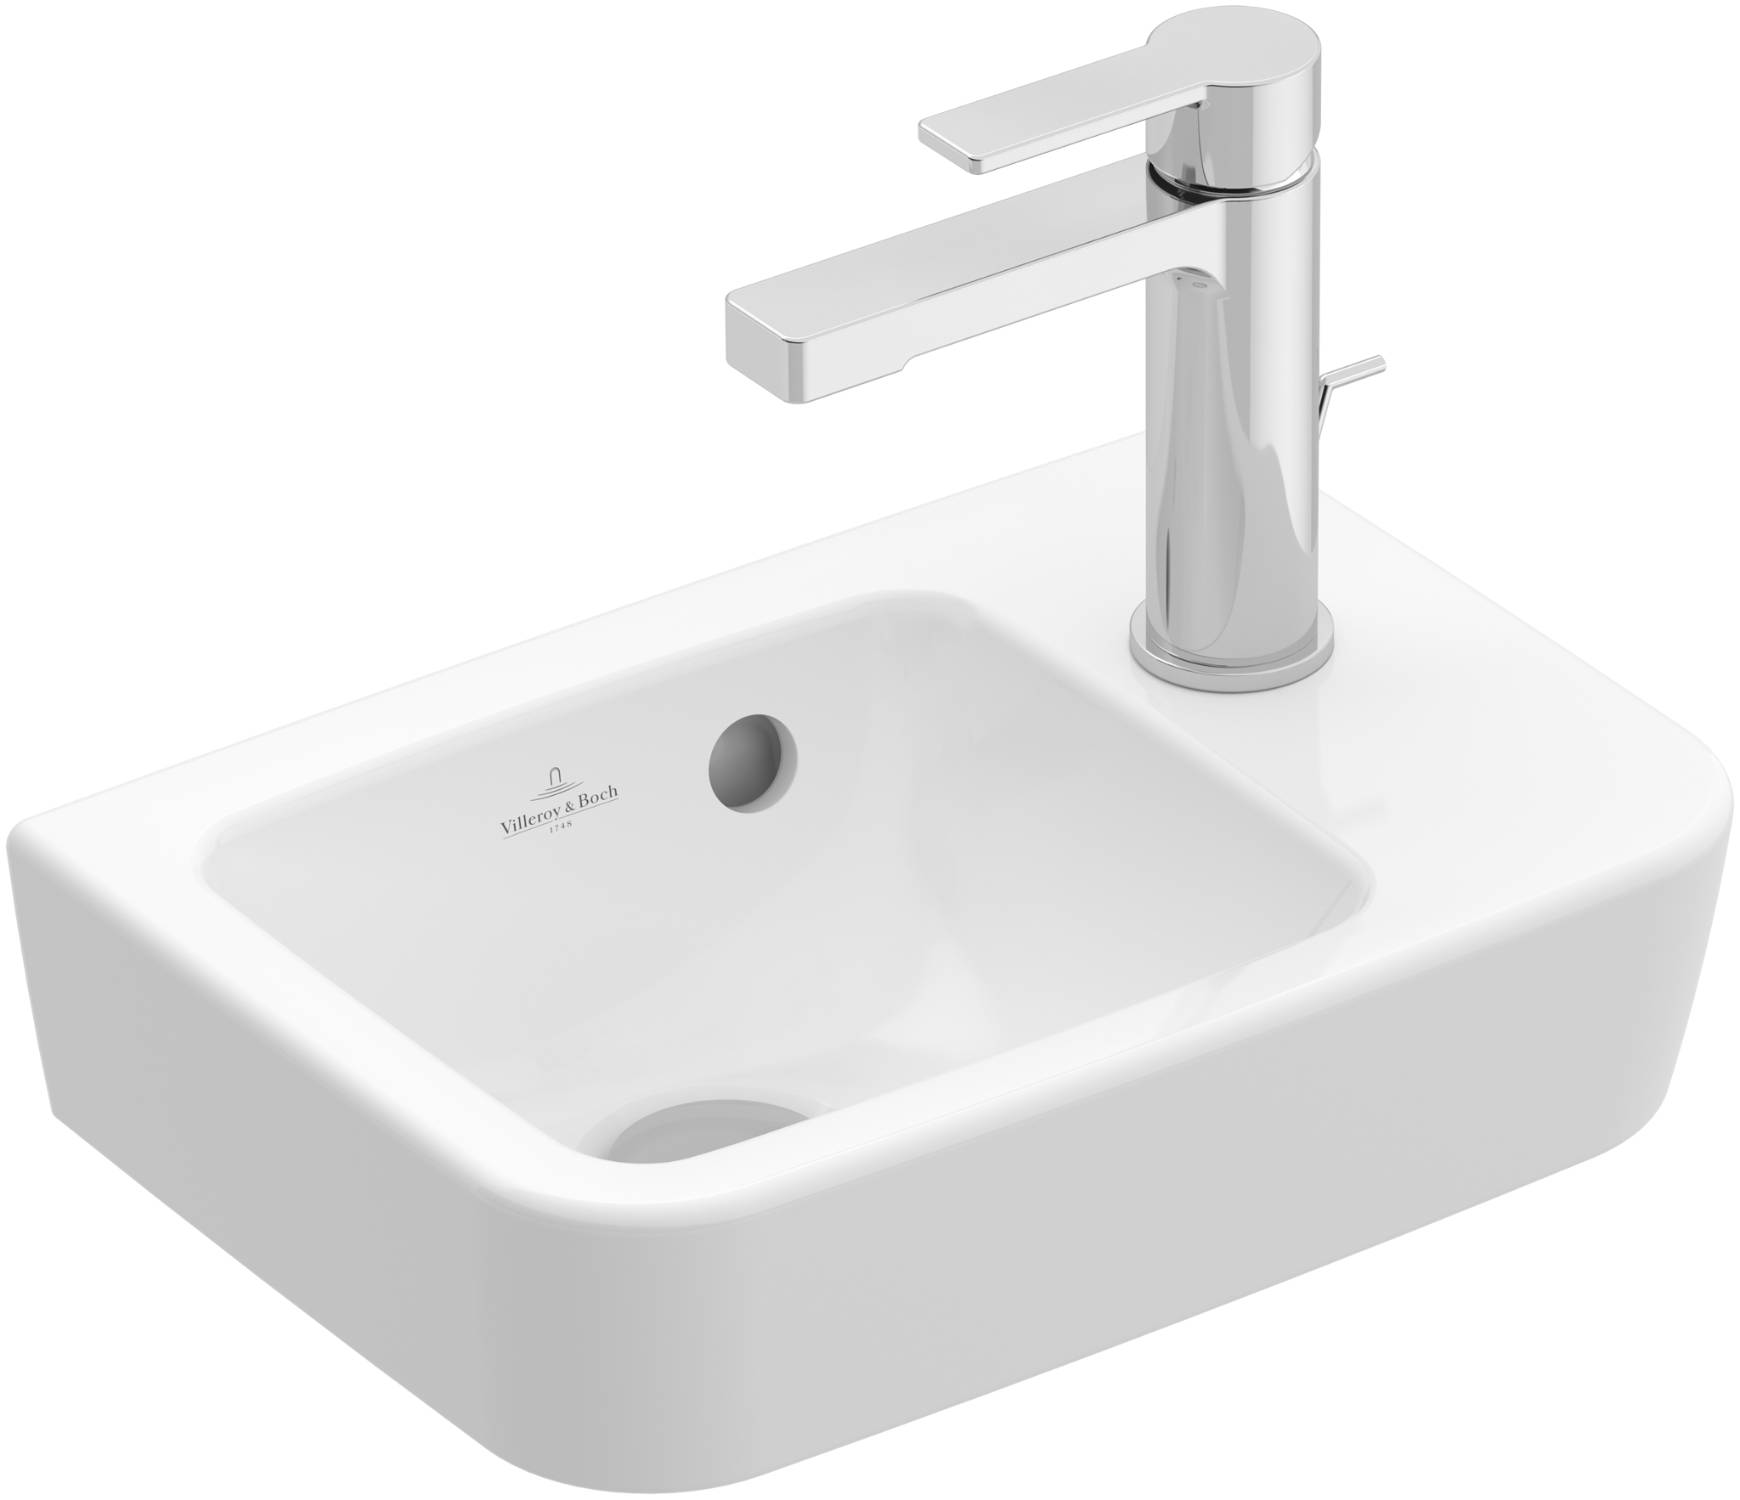 O.novo Handwashbasin Compact 434336